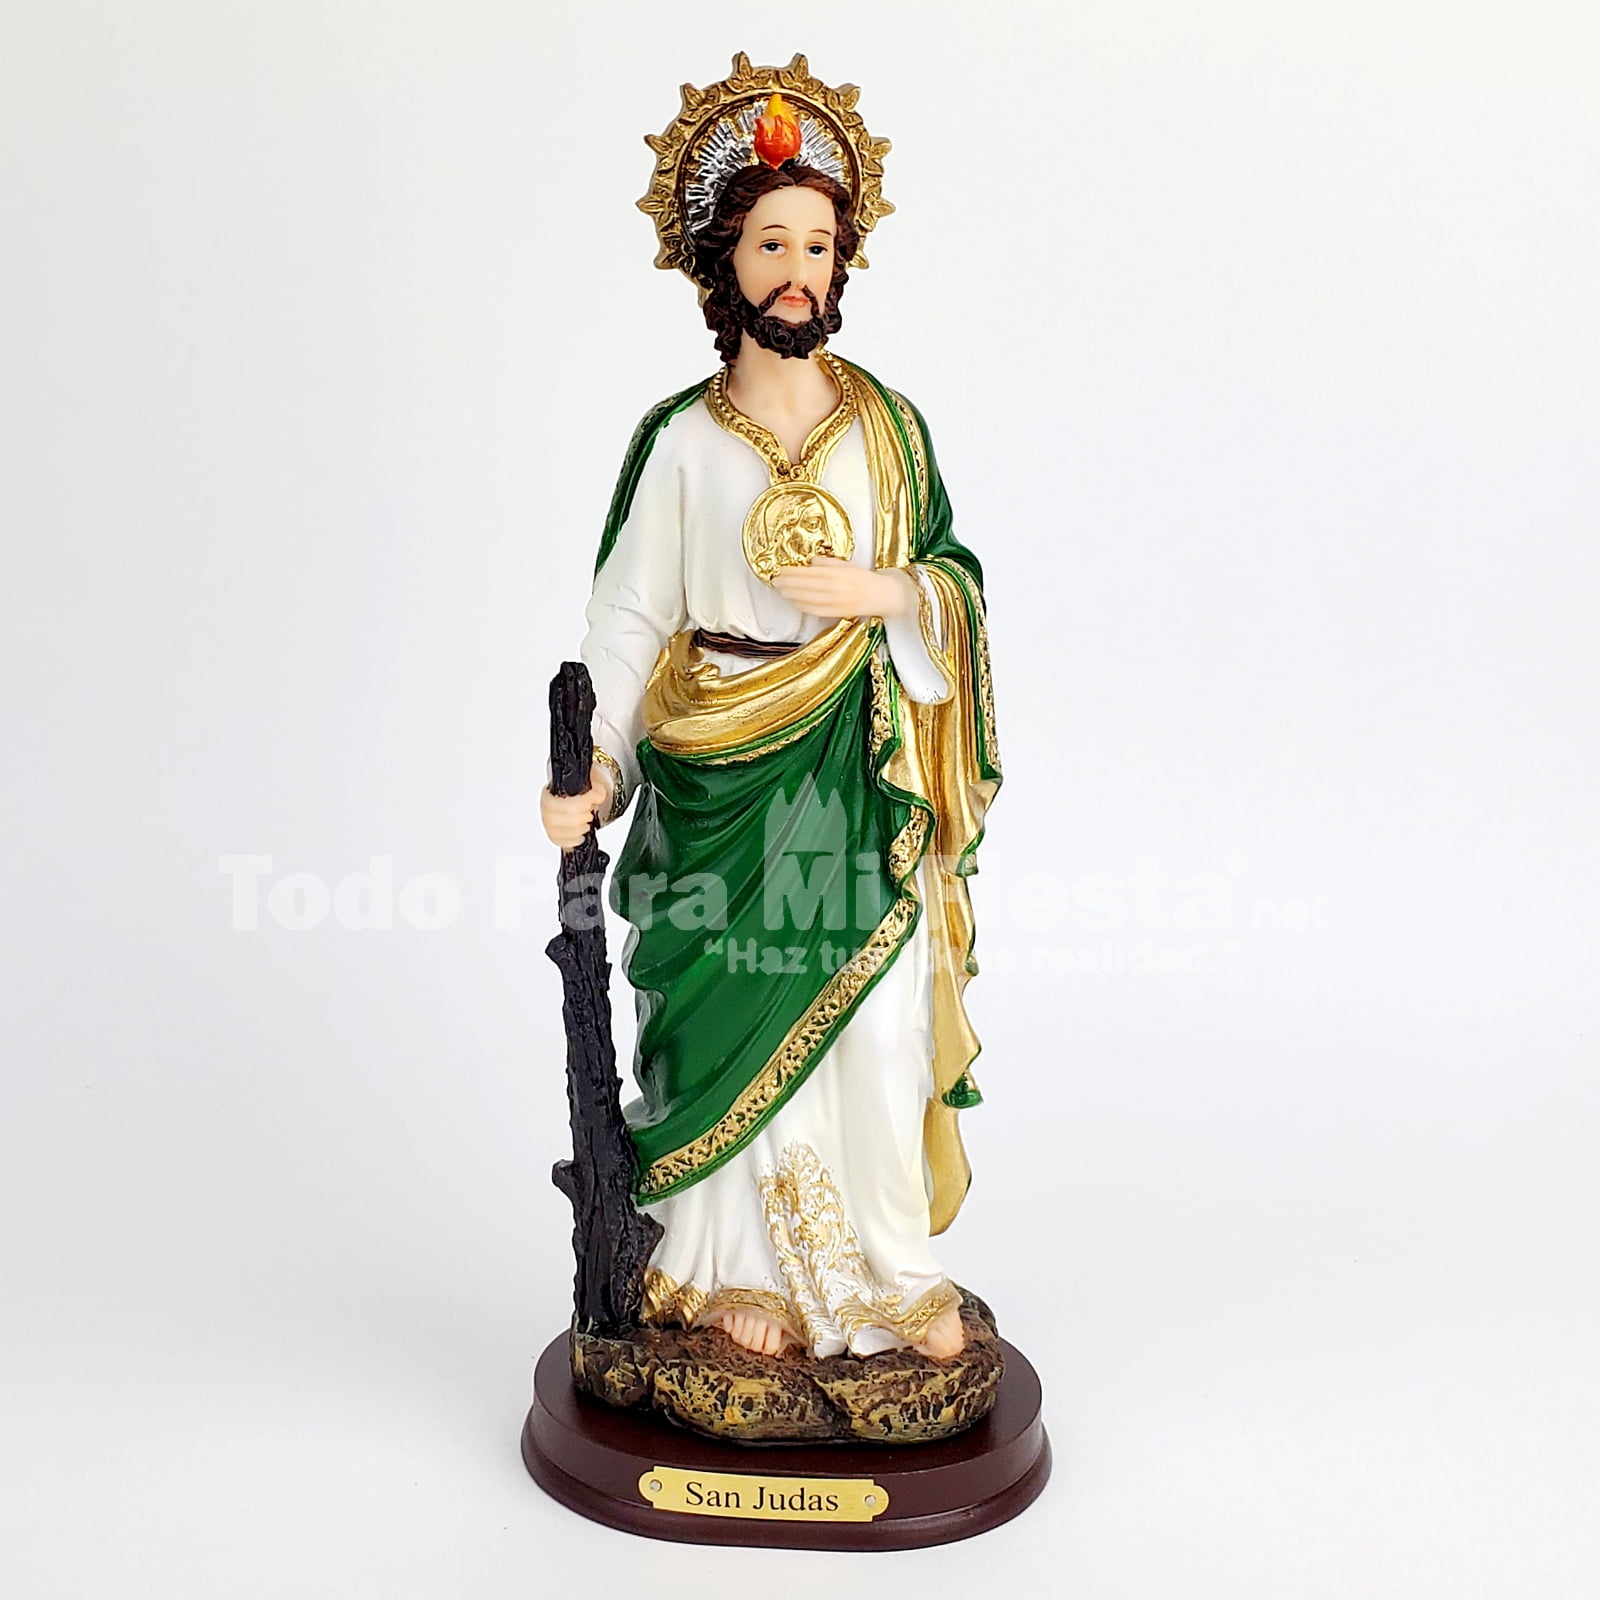 San Judas Tadeo 24 Inch Saint June Religious Figure Resin Material